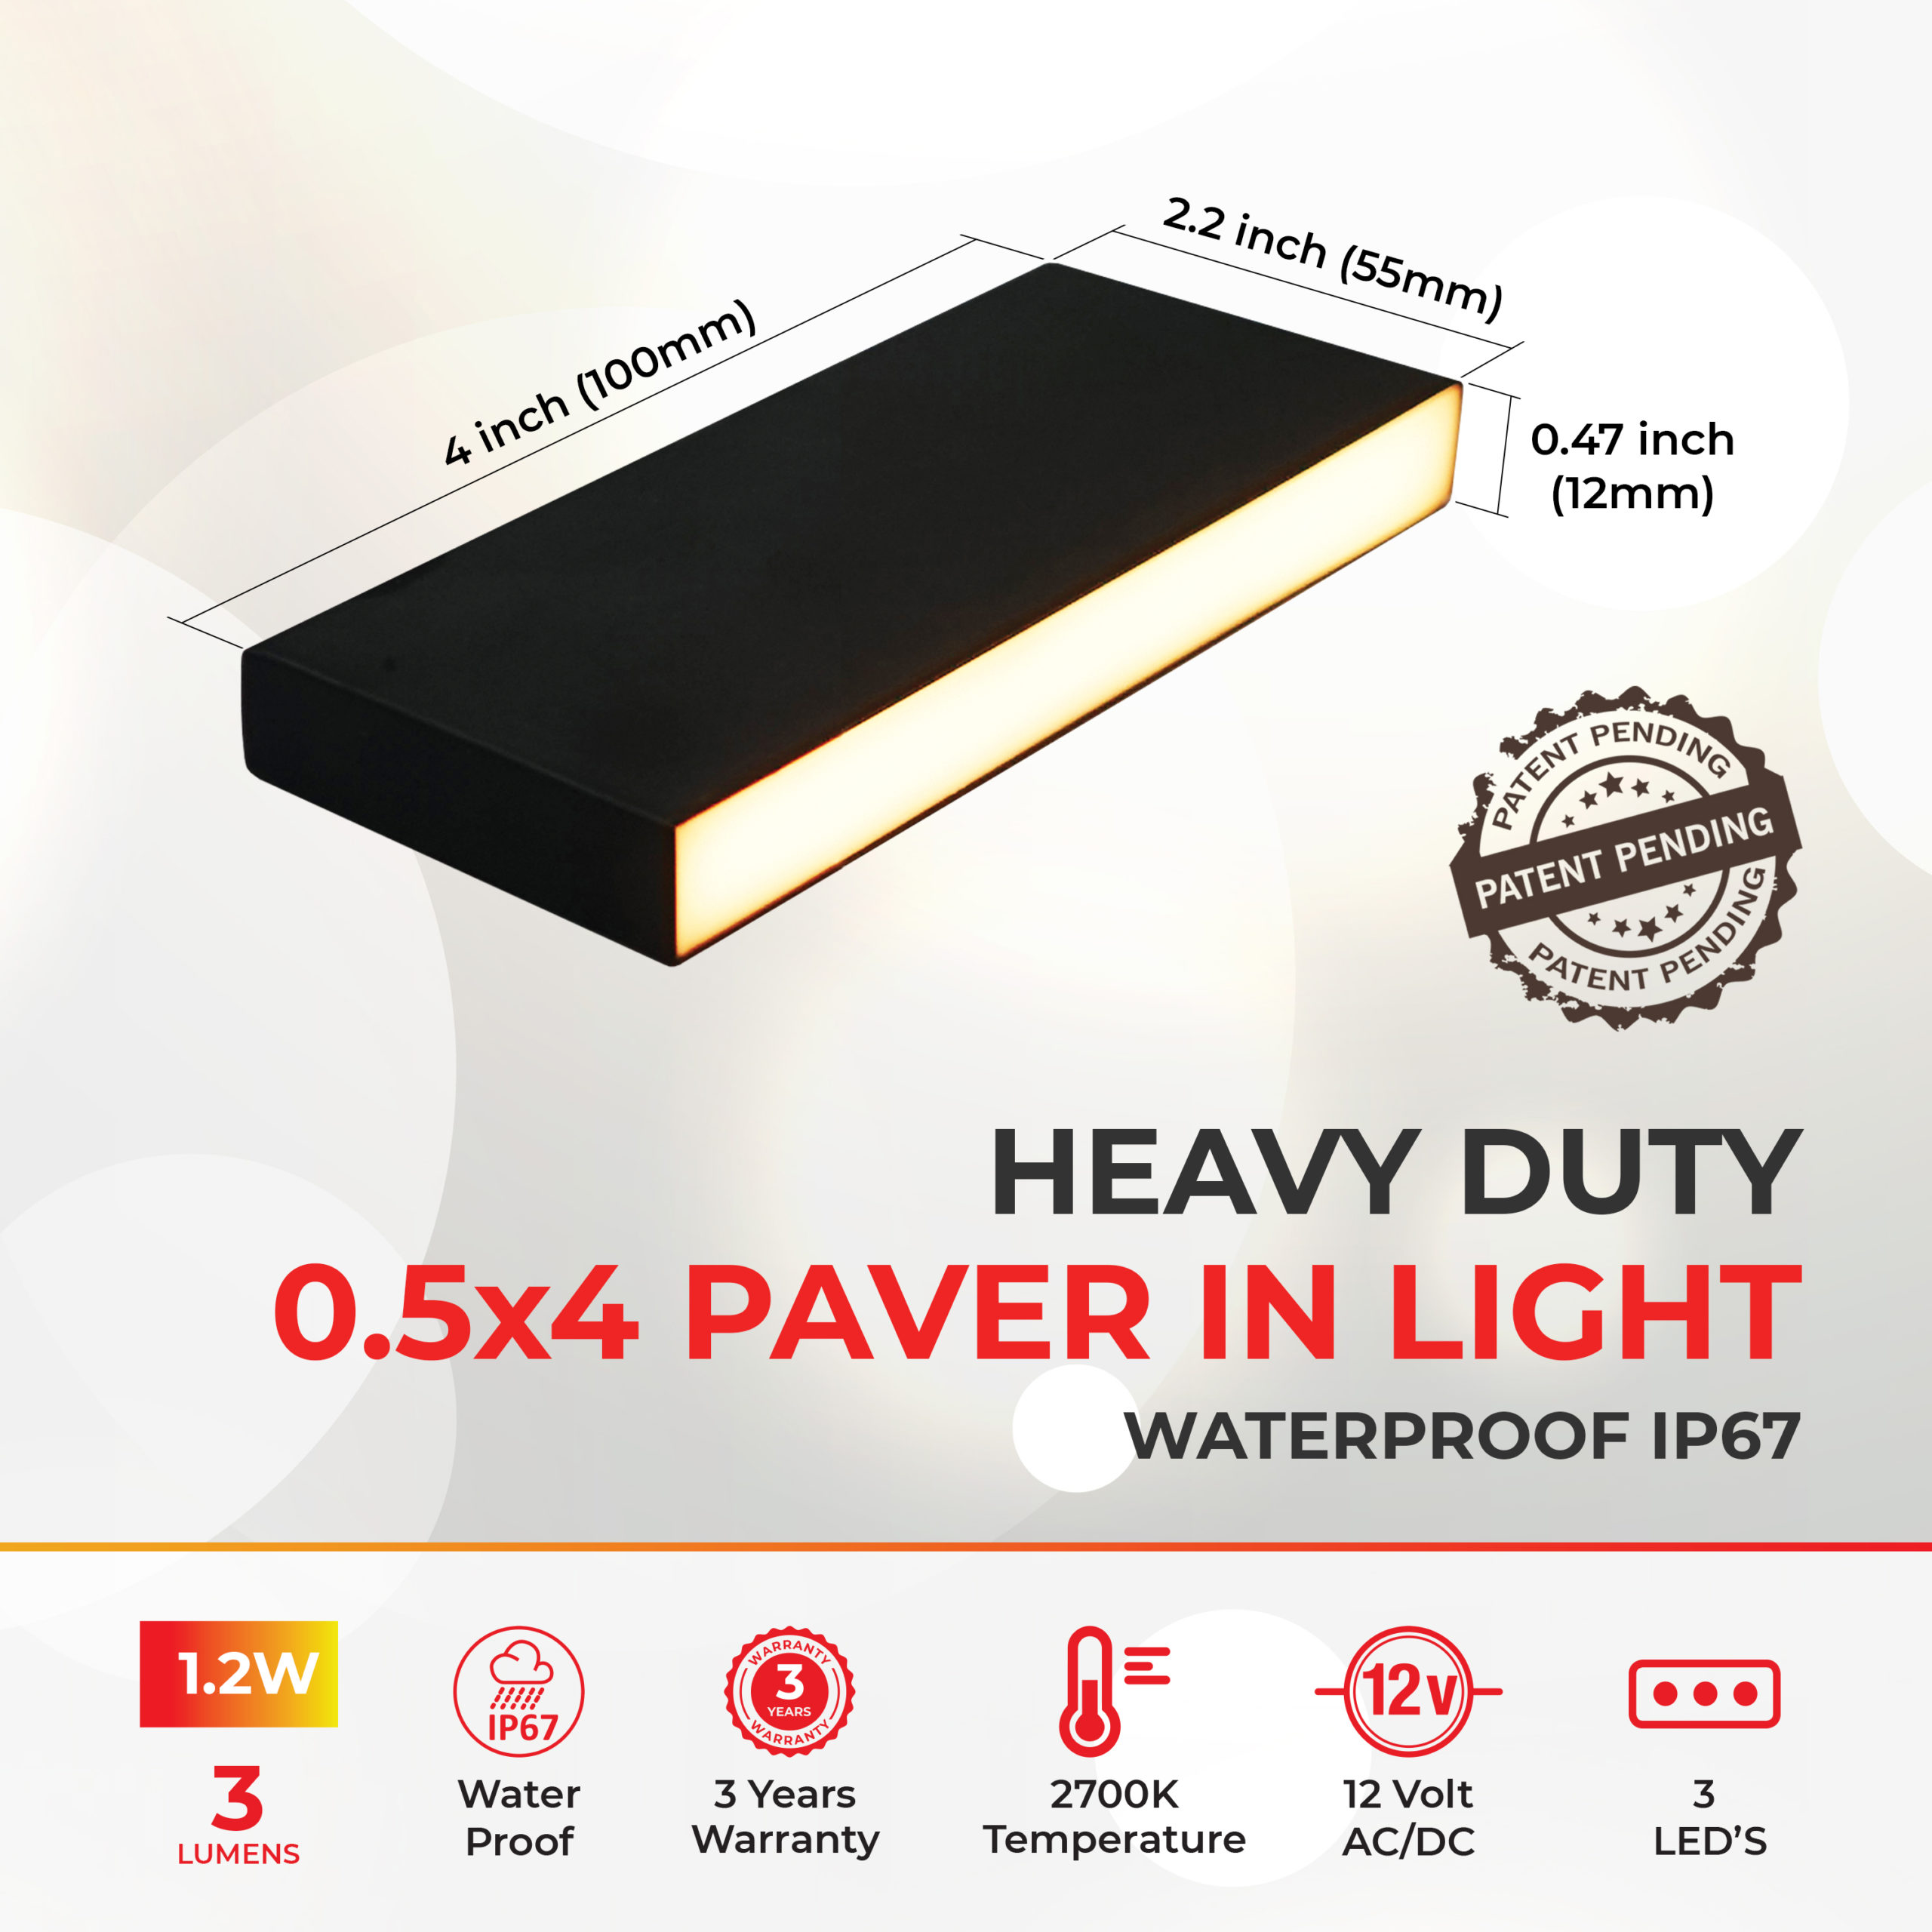 4 inch/0.5w LED Ambiance Hardscape Paver Step Light - Lumengy